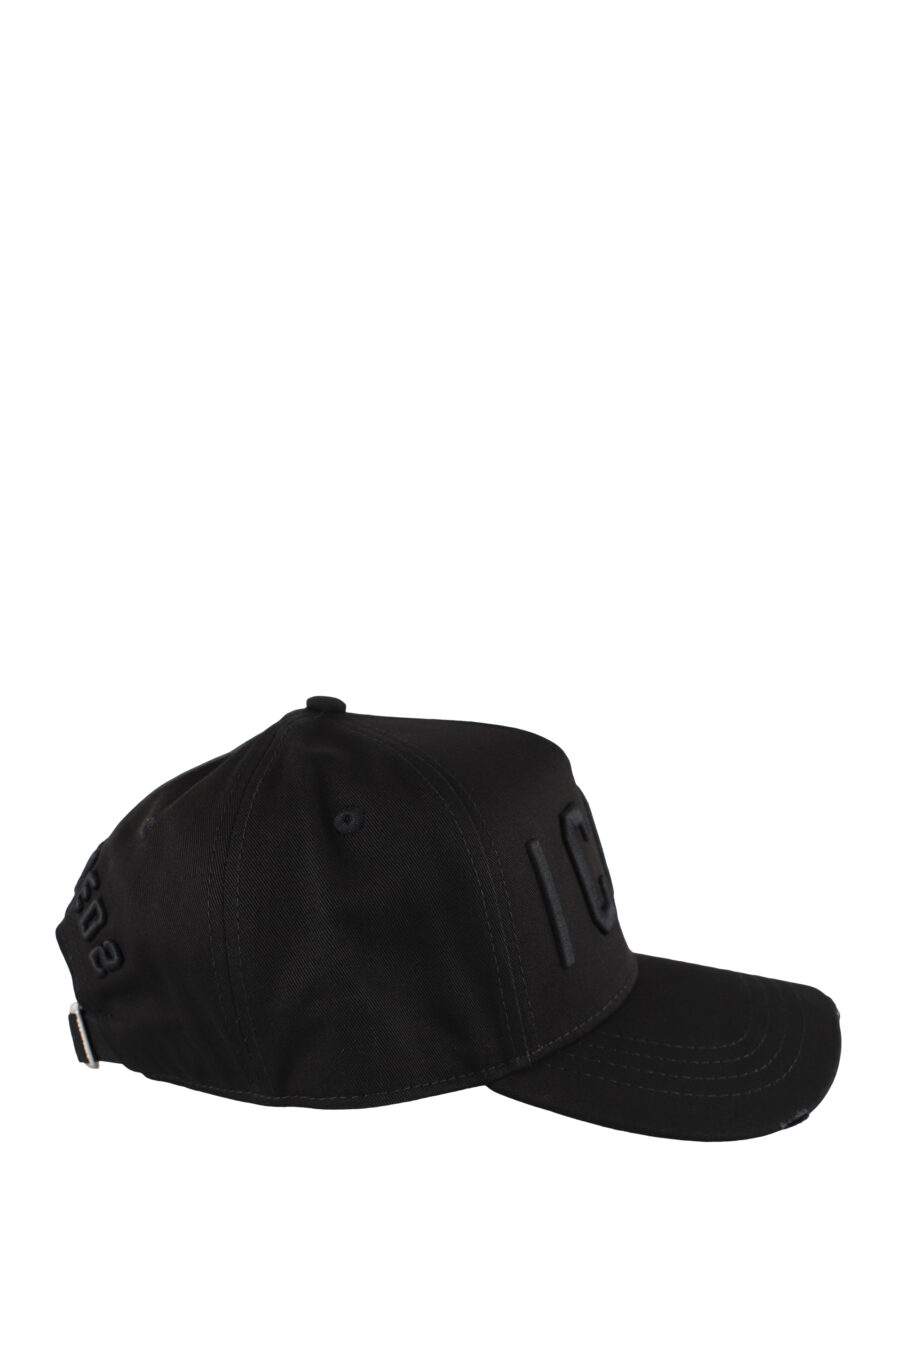 Schwarze Kappe mit einfarbigem "Icon"-Logo - IMG 5165